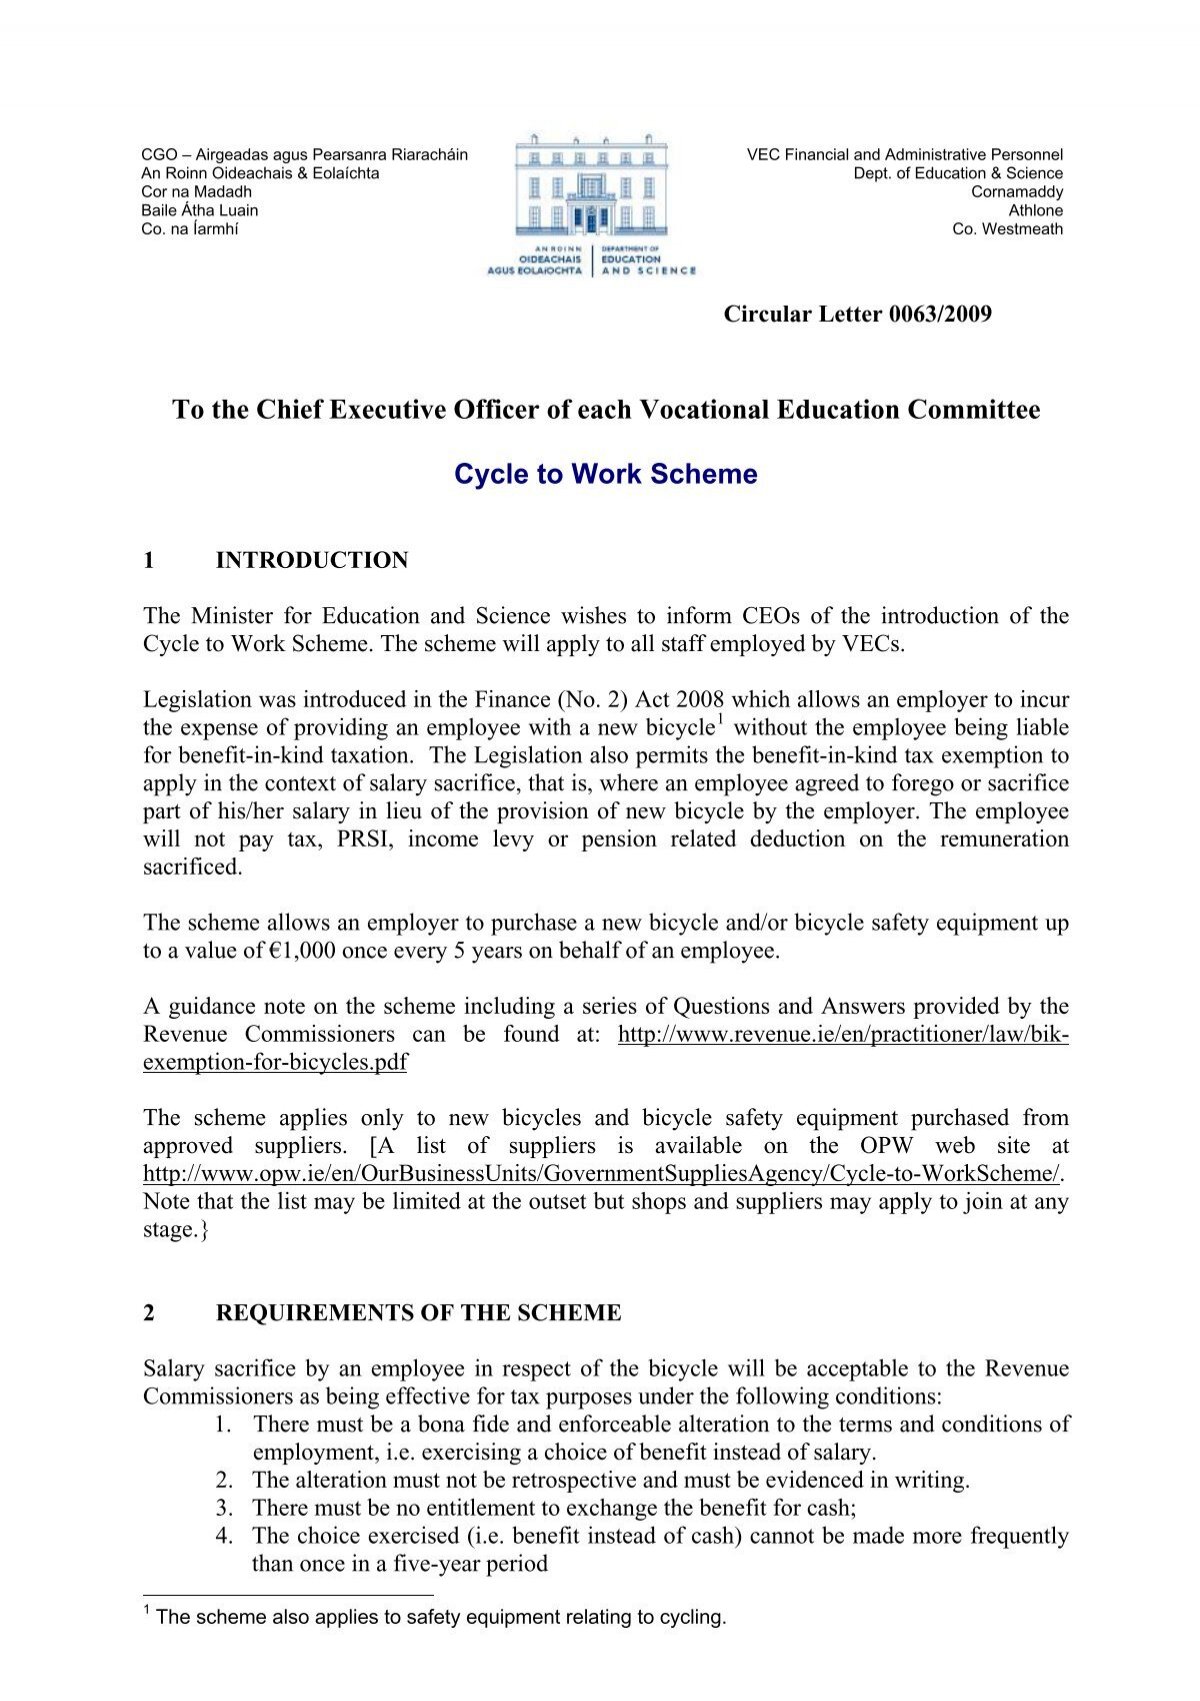 revenue cycle to work scheme